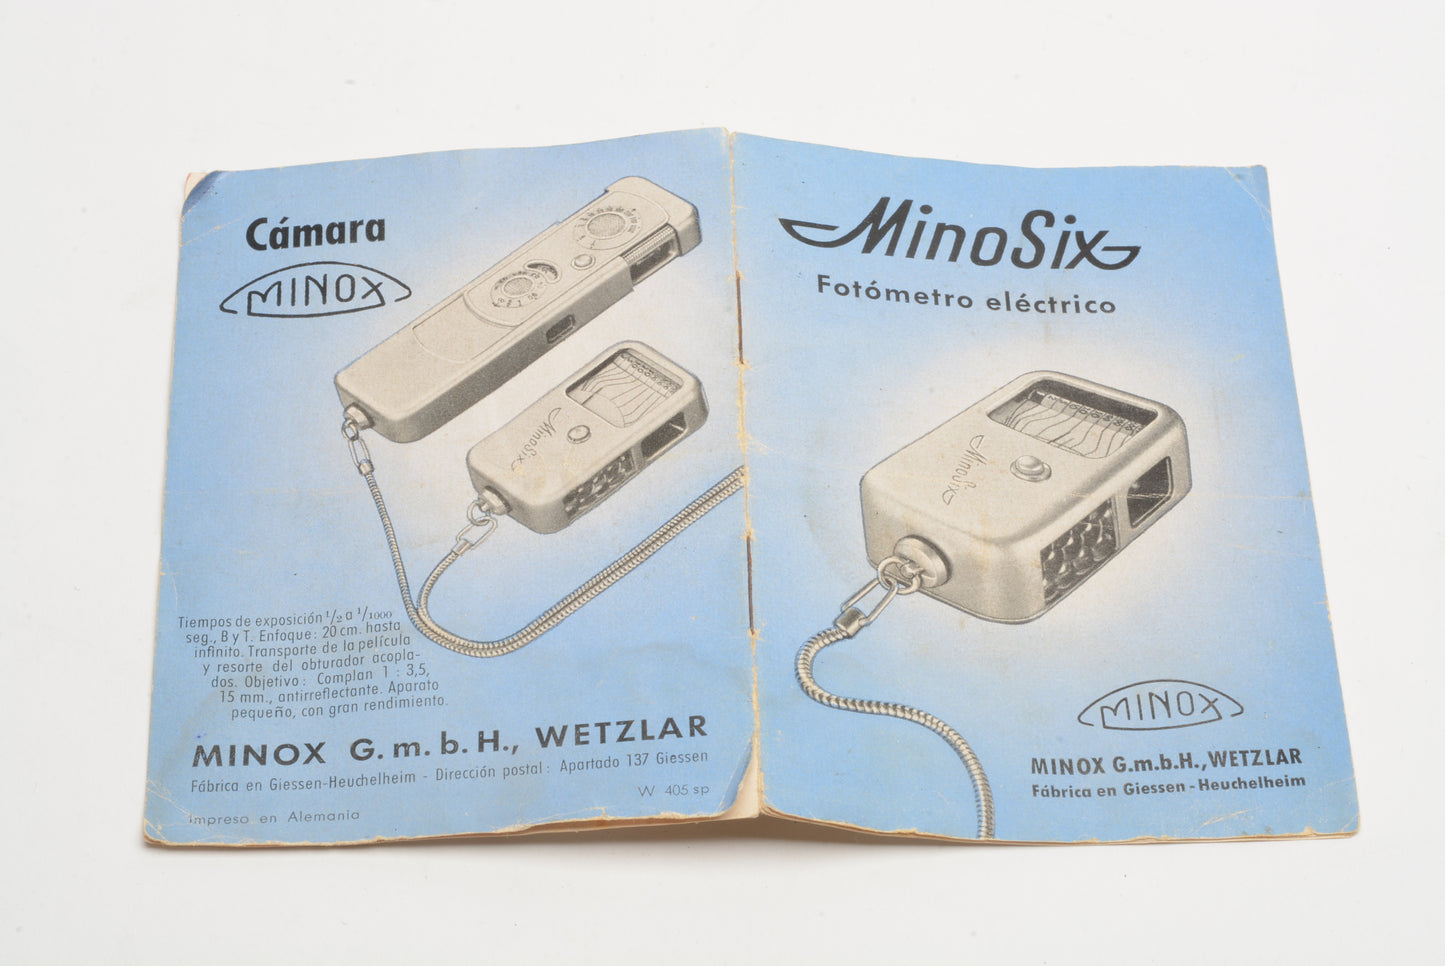 Minox Minosix light meter w/case, metal chain, and instructions